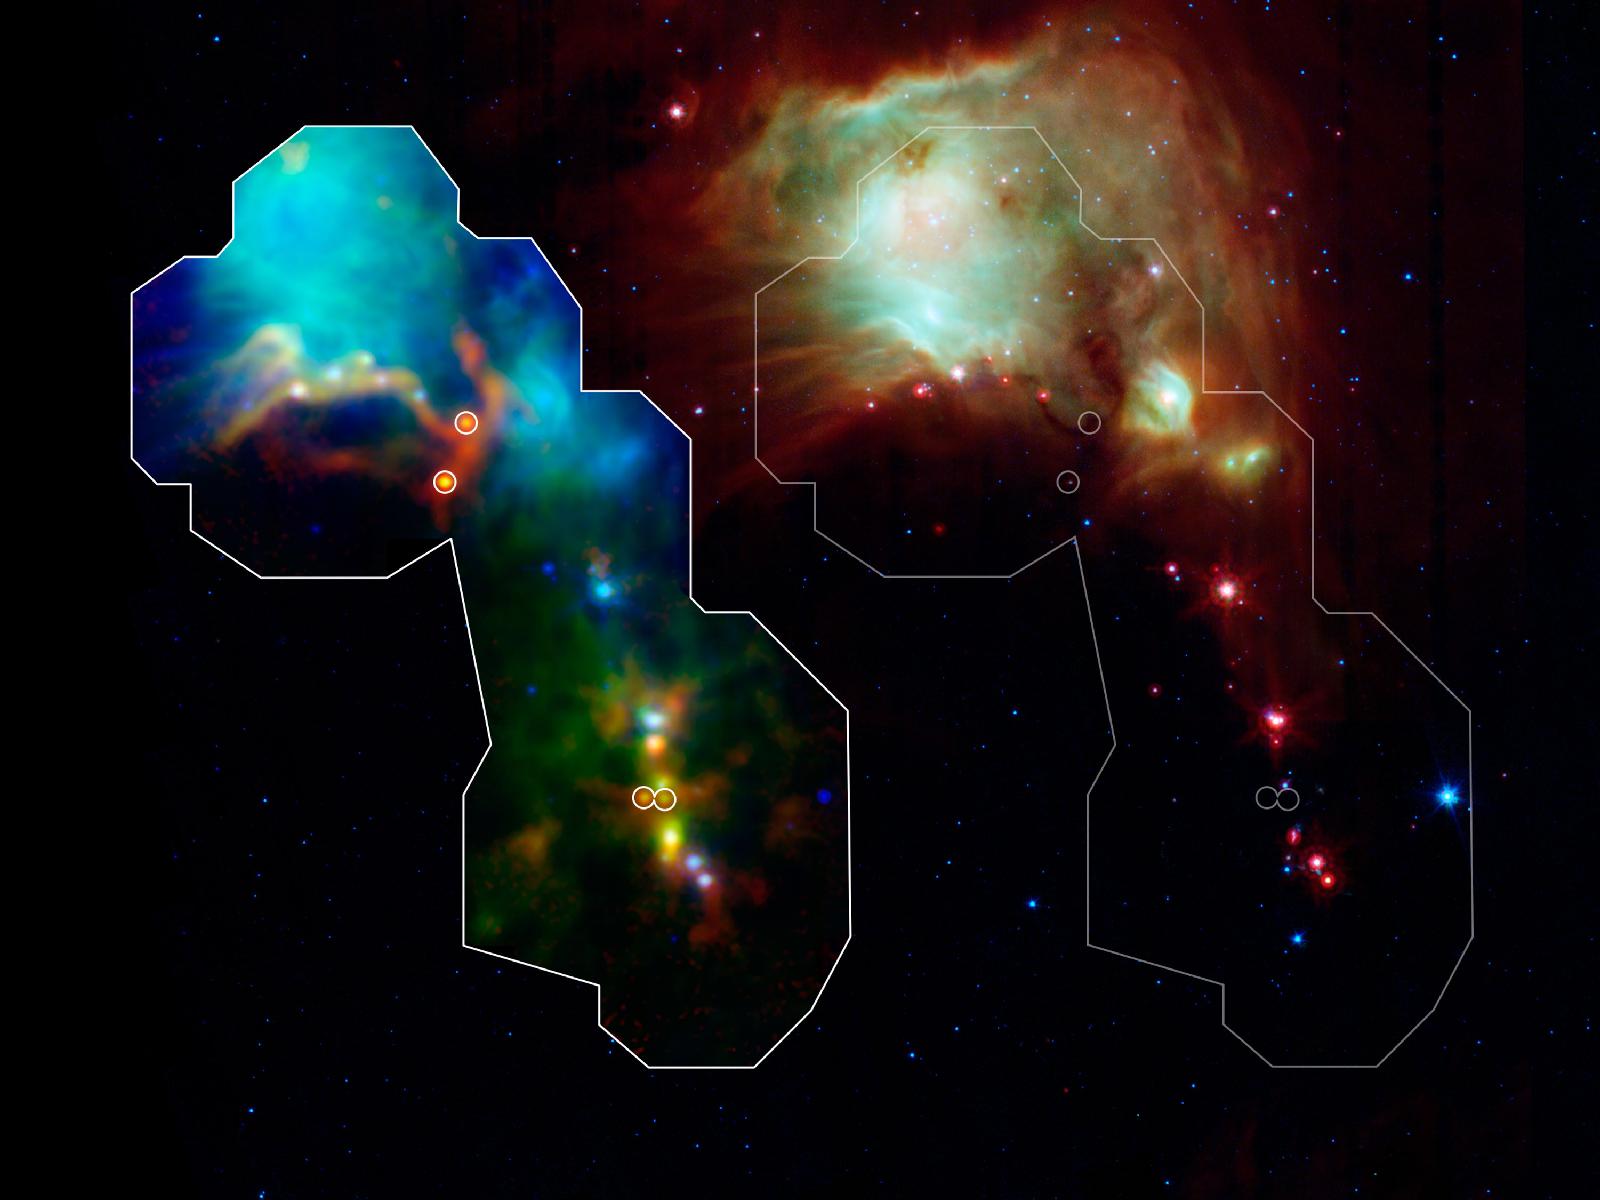 Image credit: NASA/ESA/ESO/JPL-Caltech/Max-Planck Institute for Astronomy